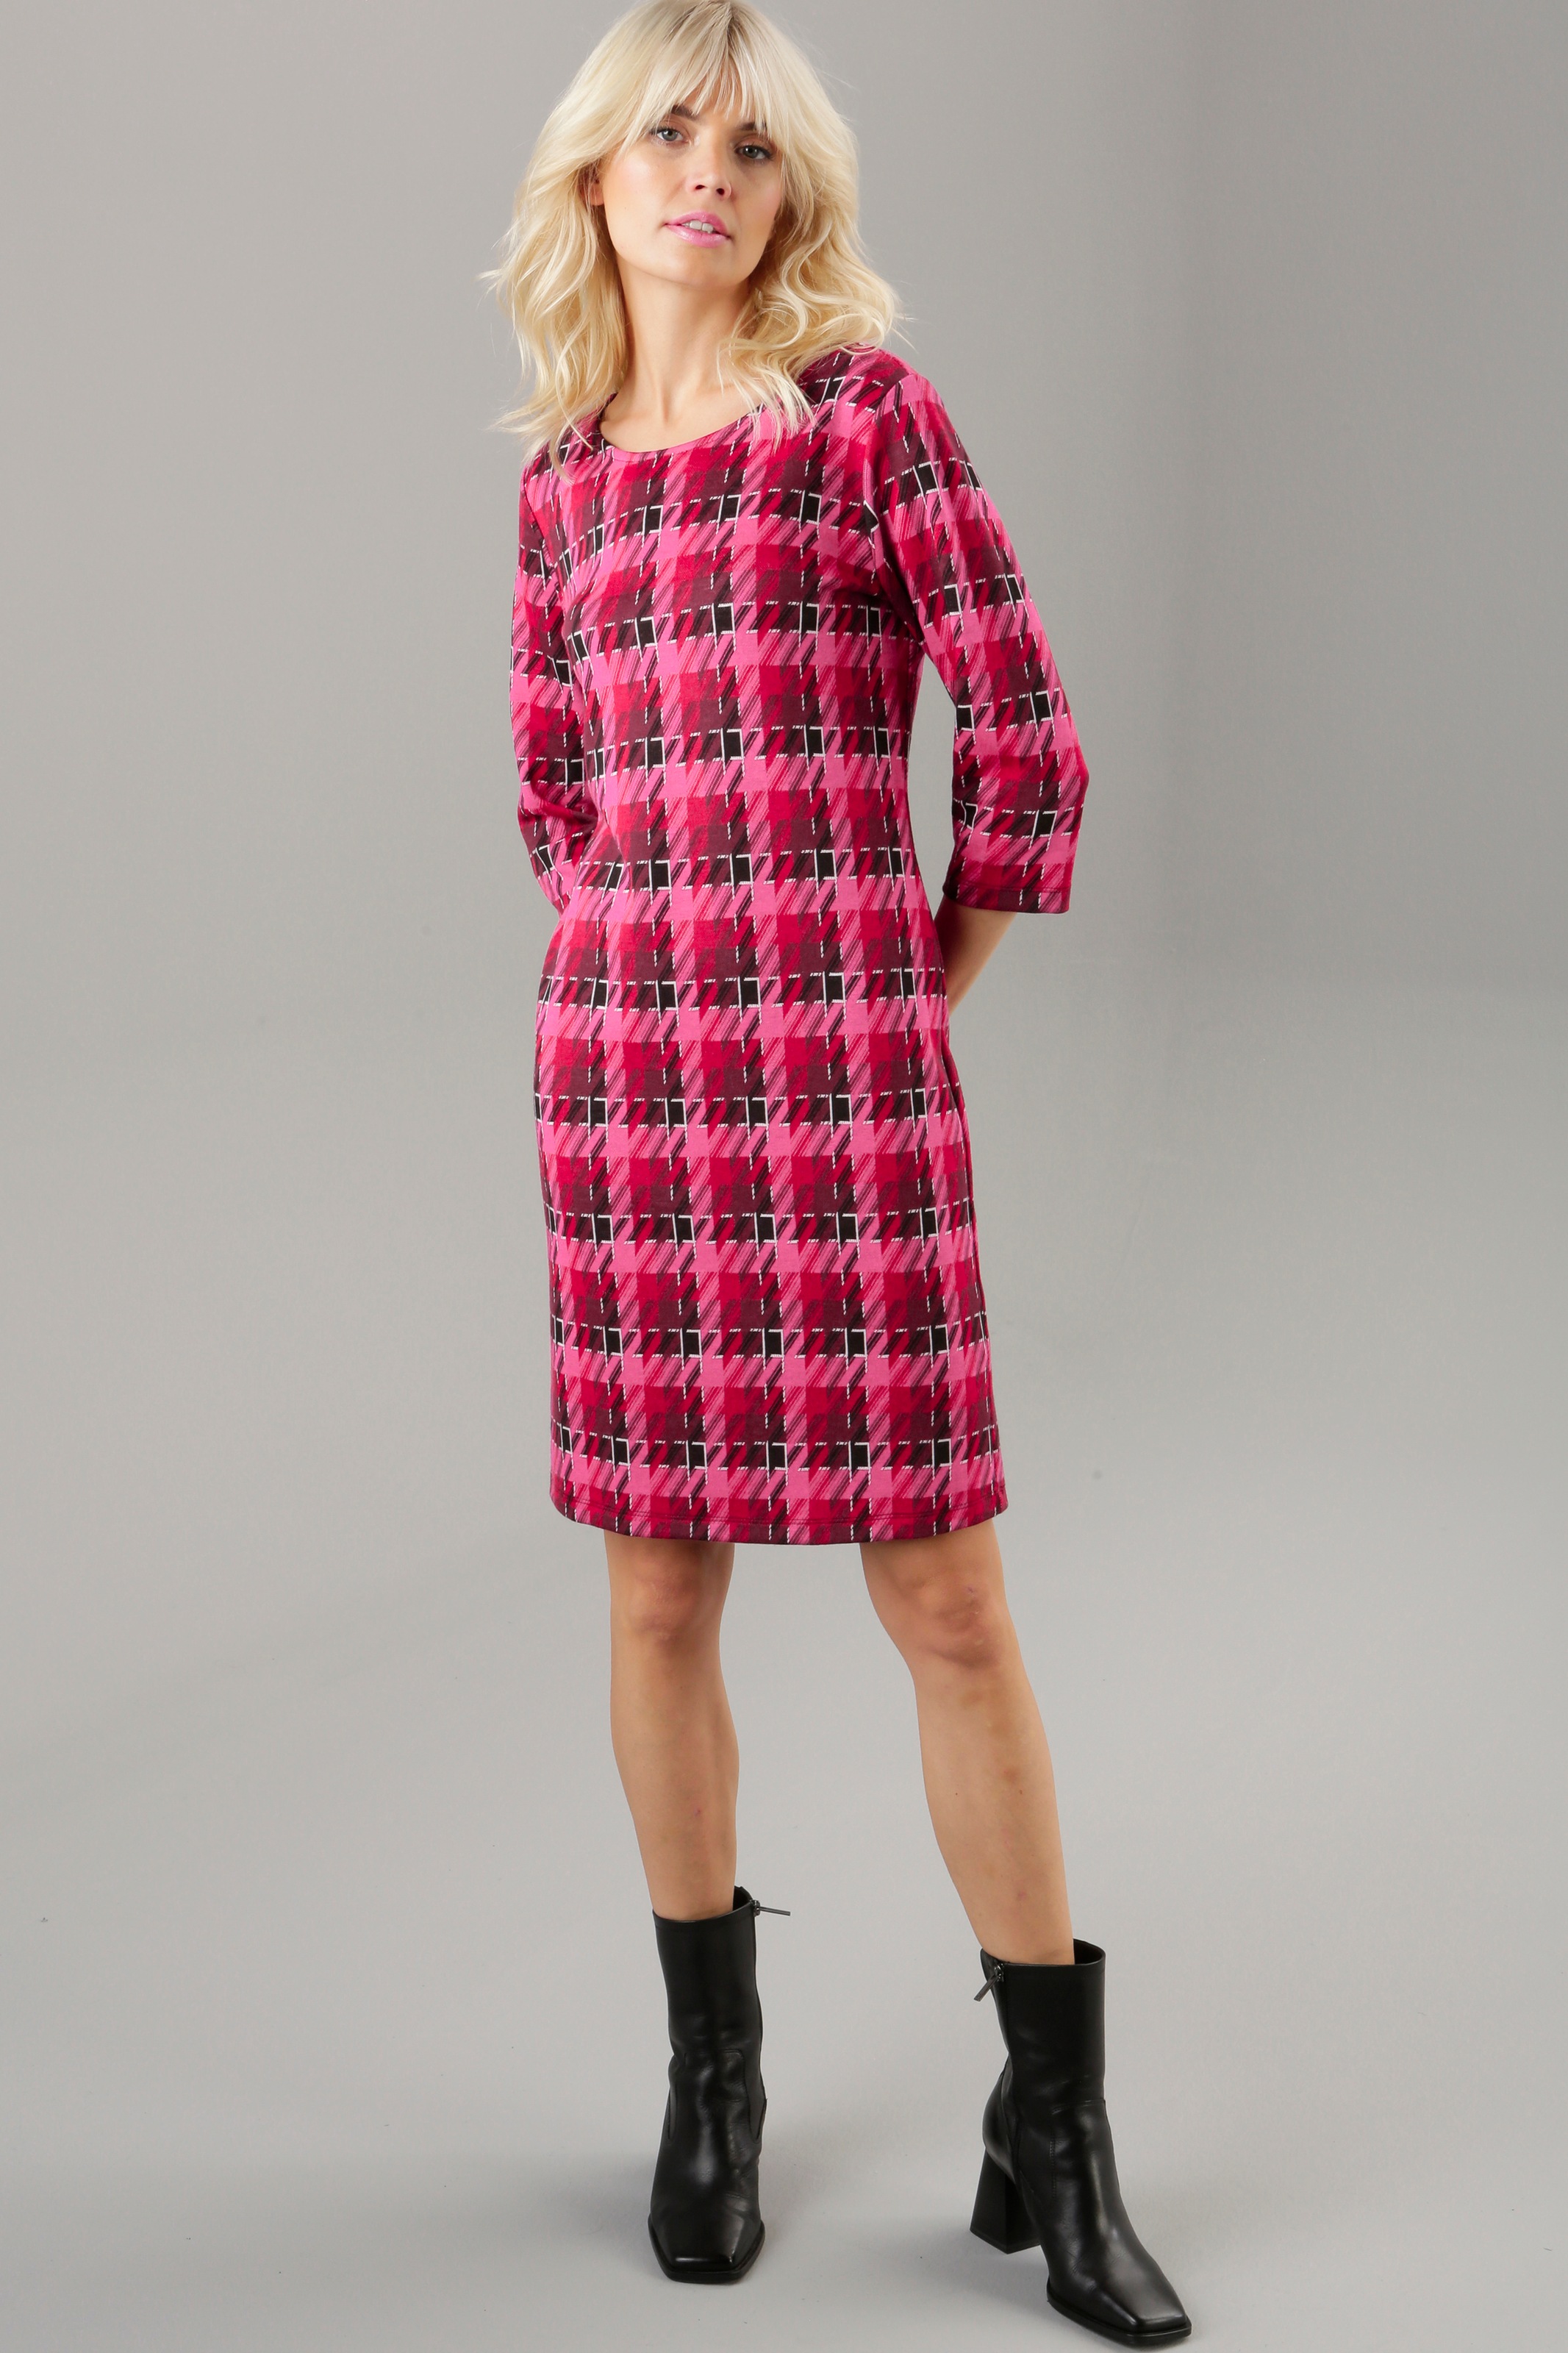 Aniston SELECTED bei Knallfarben mit in Allover-Muster OTTO trendy bestellen online Jerseykleid